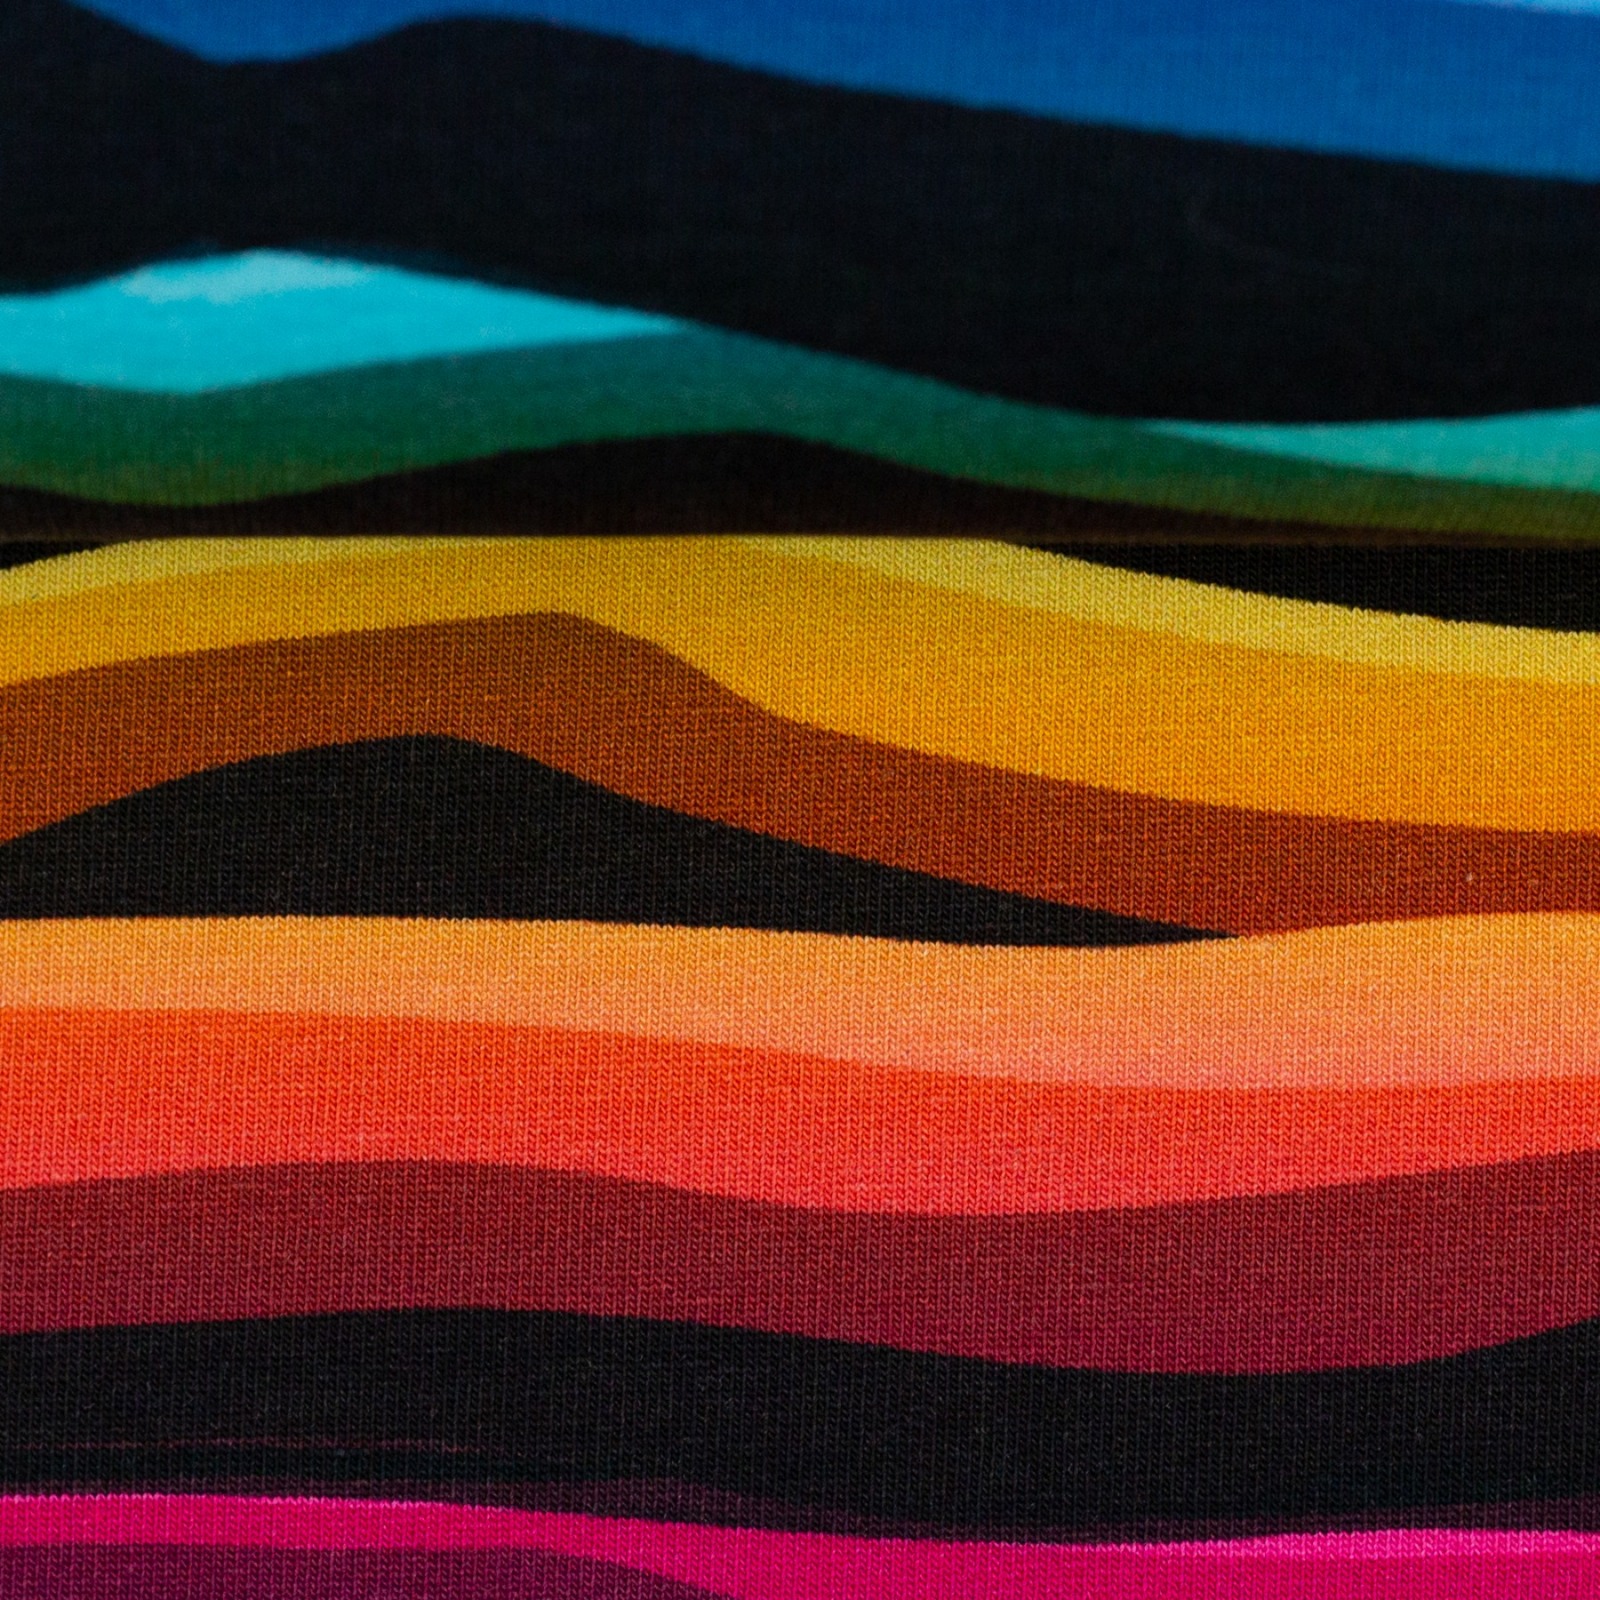 05m Sweat Wavy Stripes by Lycklig Design Regenbogen rainbow bunt 2